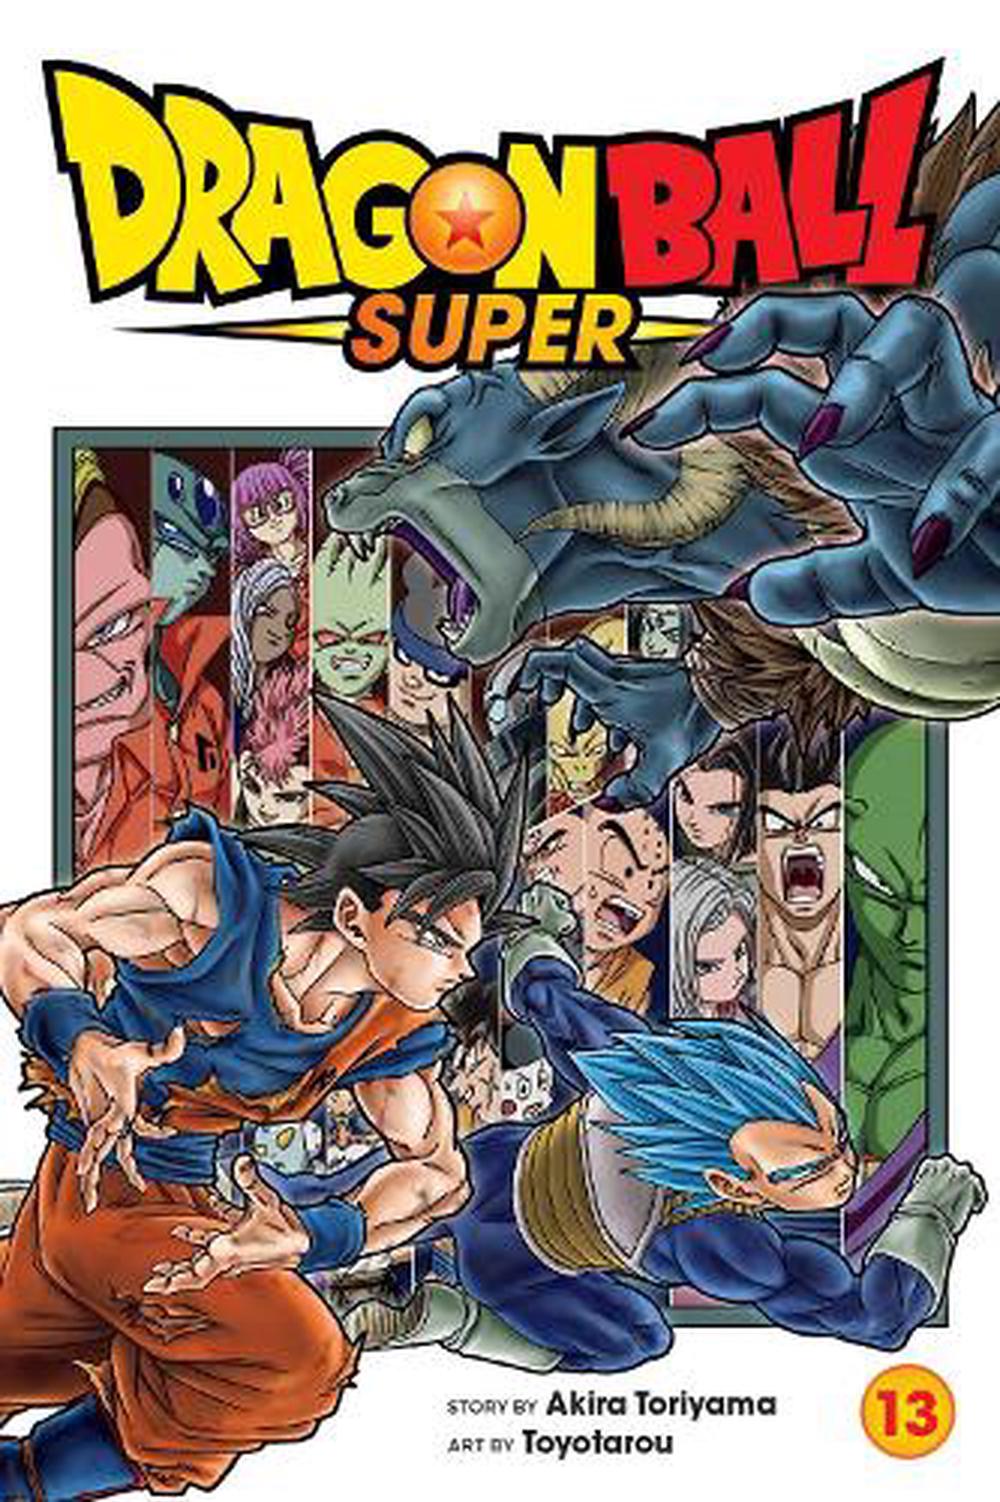 Dragon Ball Super Vol 13 By Akira Toriyama Paperback 9781974722815